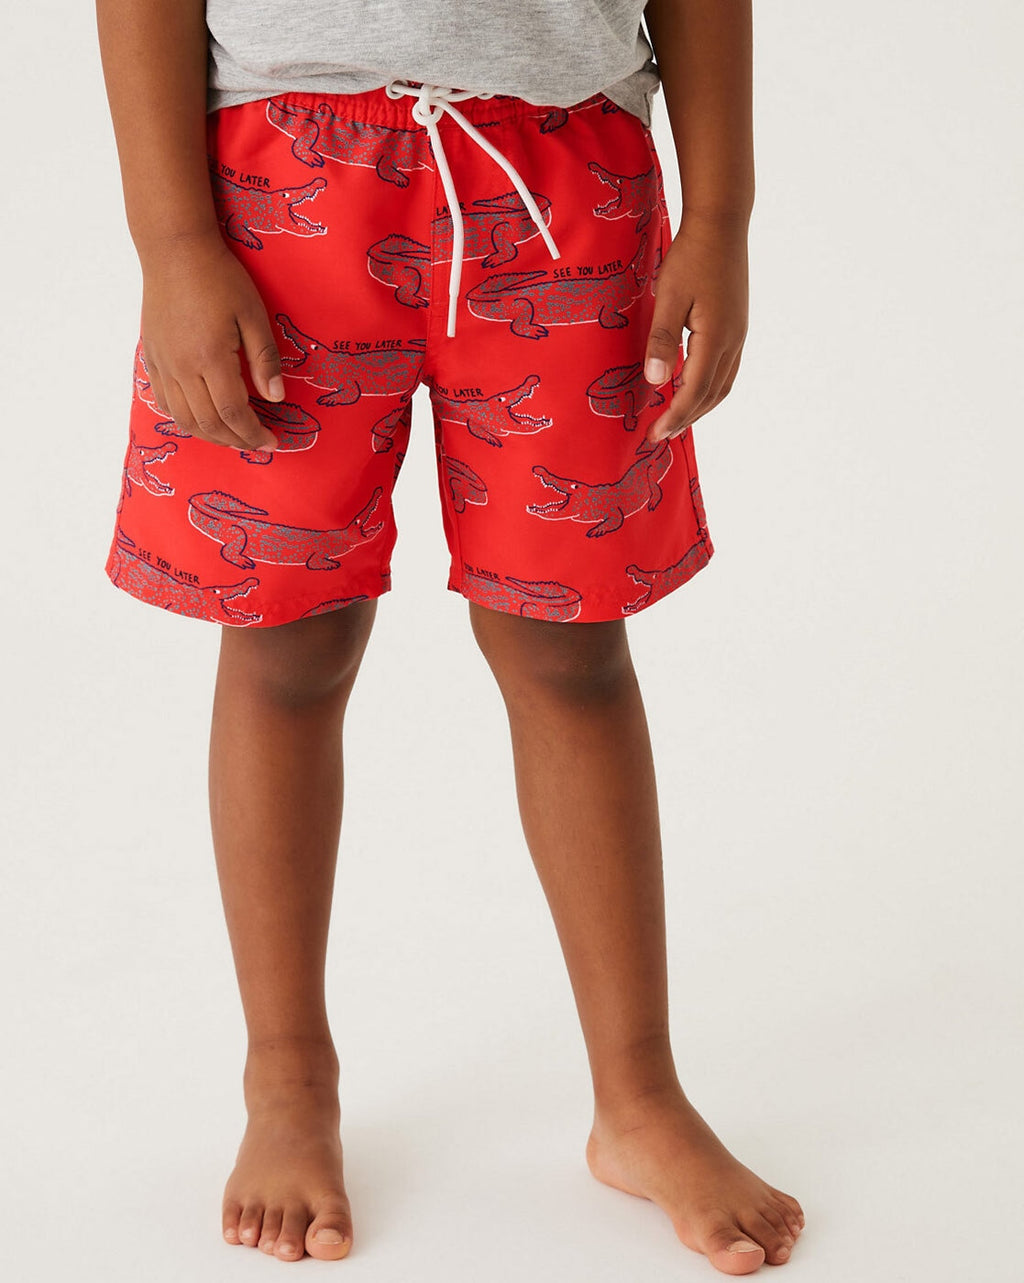 Buy swimwear for boys online at the beach company india - Alligator Swim Shorts - boys swimming shorts - printed swimwear for young boys